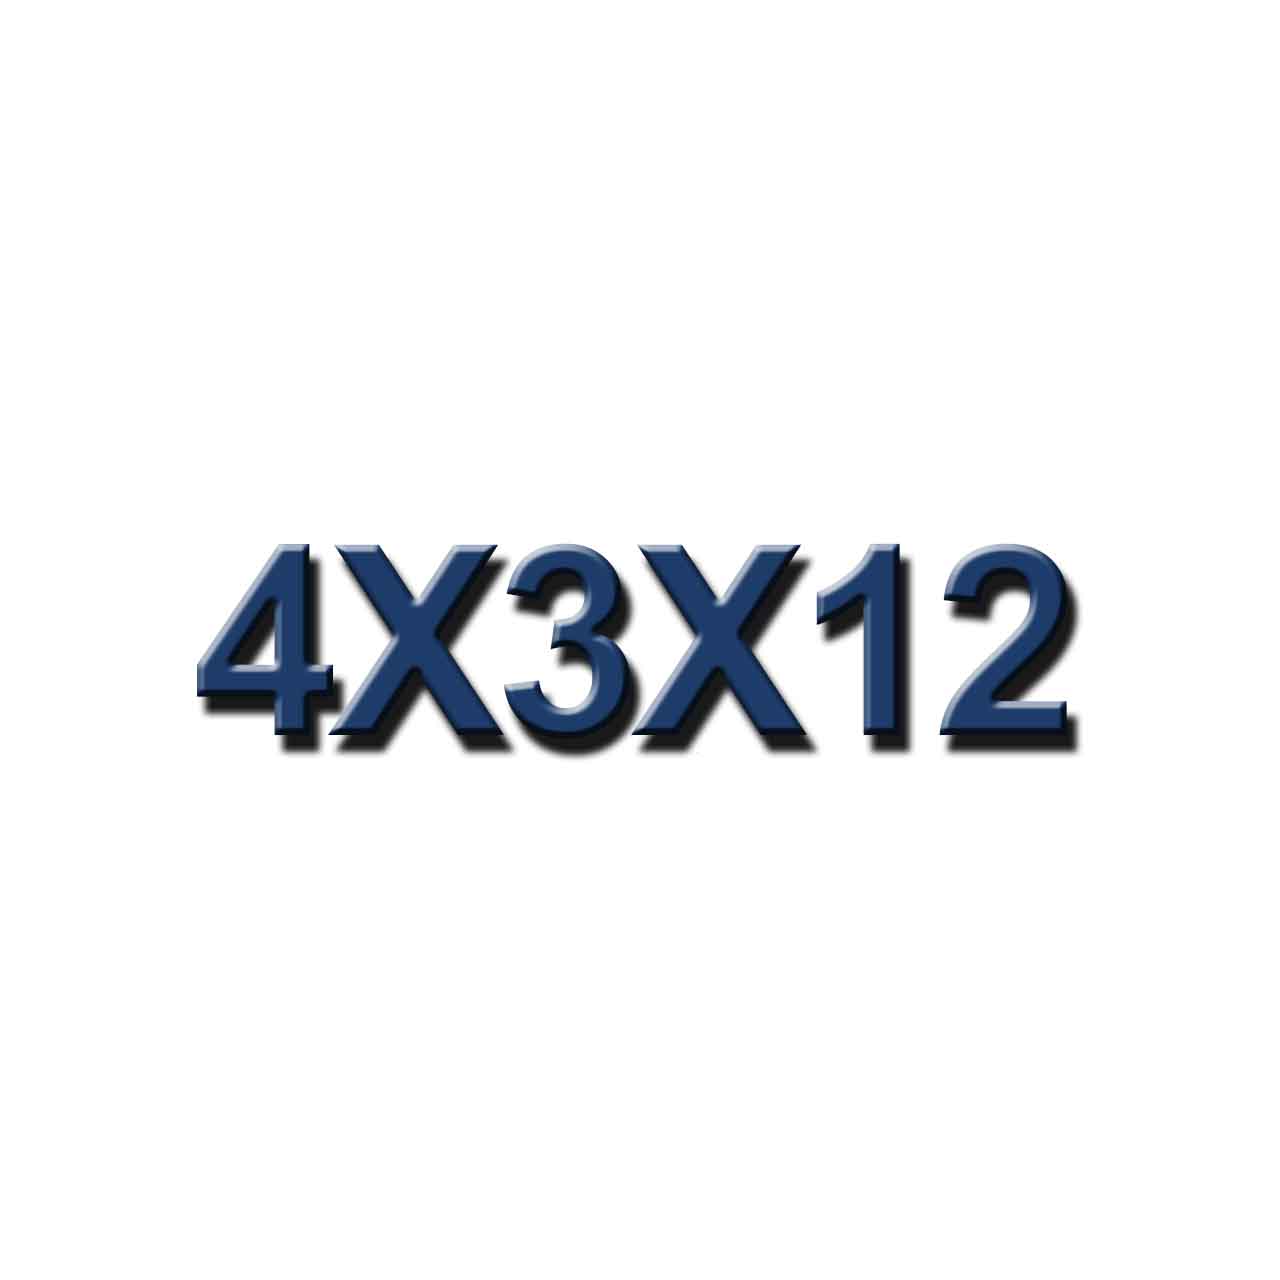 4x3x12